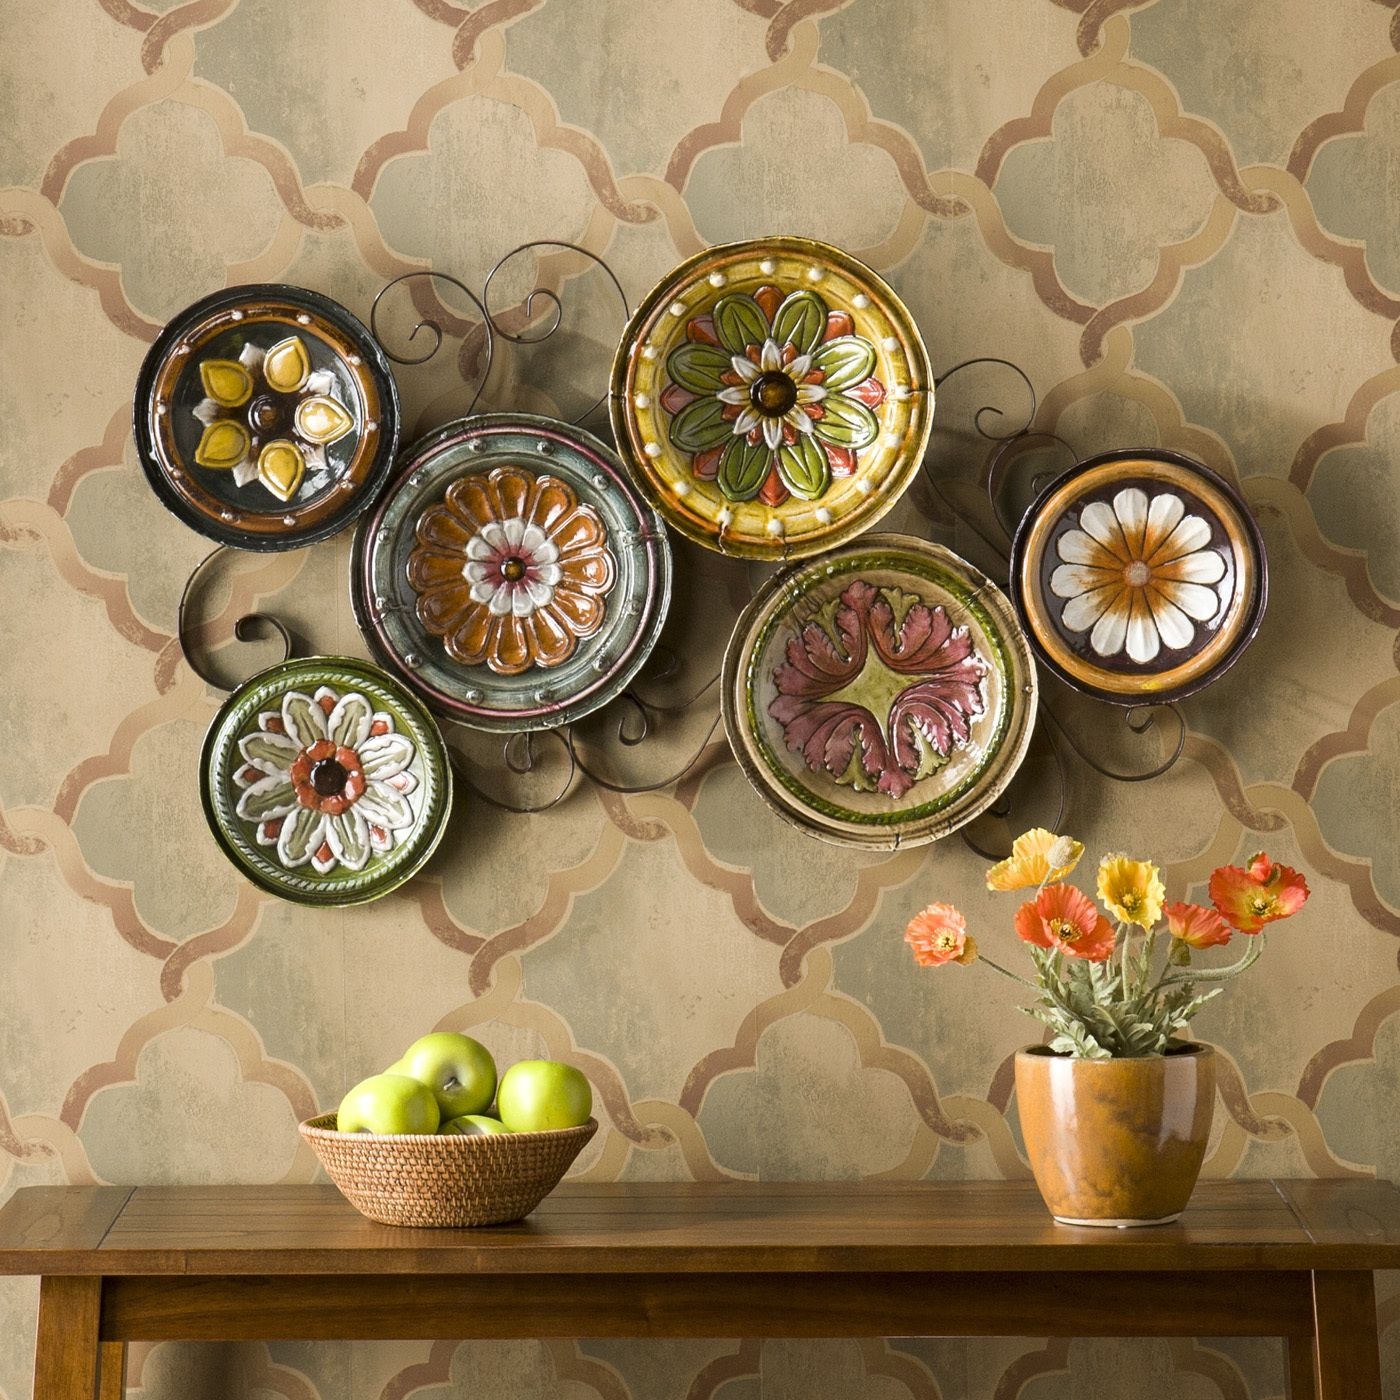 Large decorative plates display